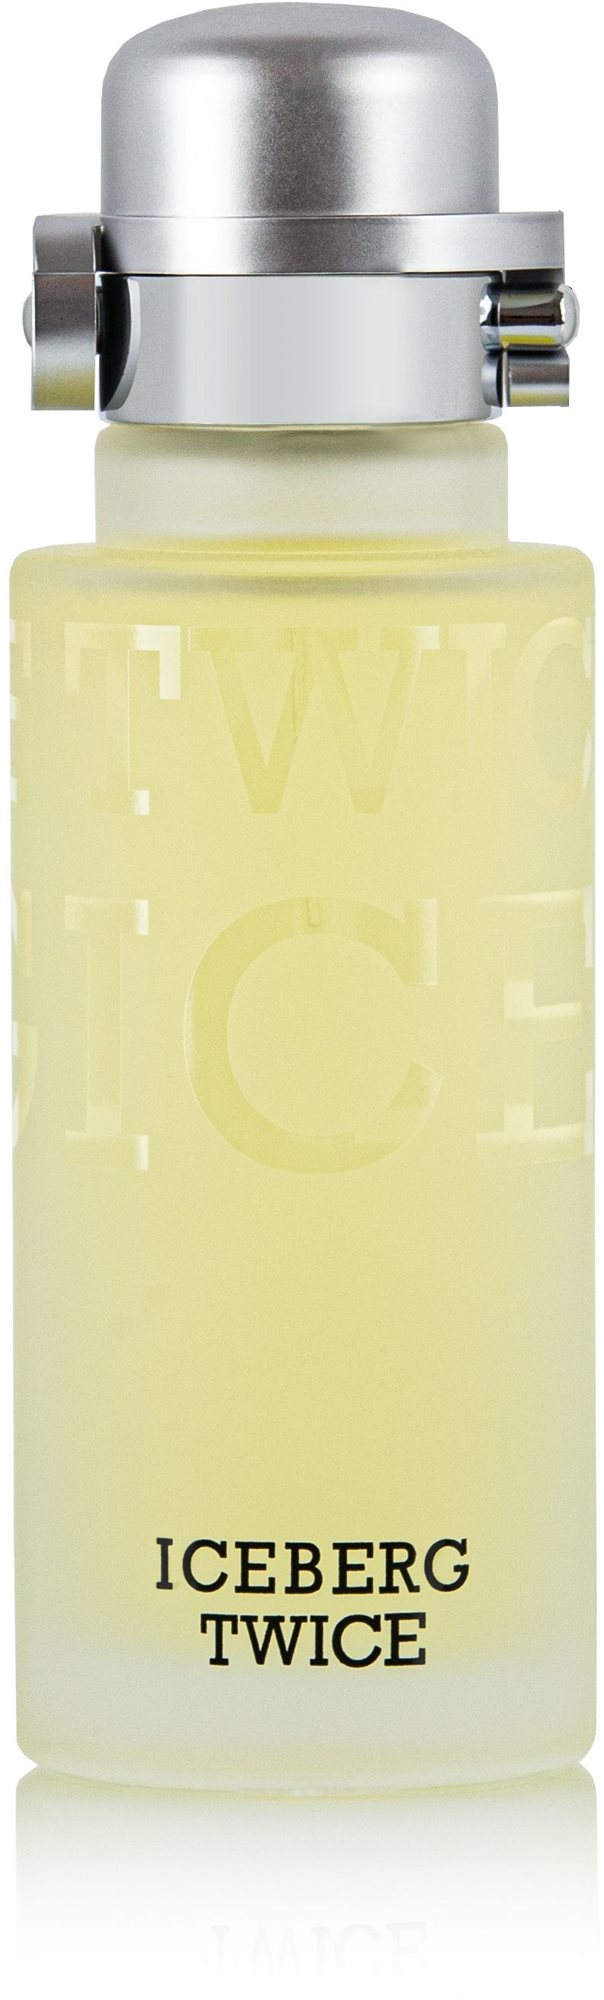 ICEBERG Twice Pour Homme EdT 125 ml